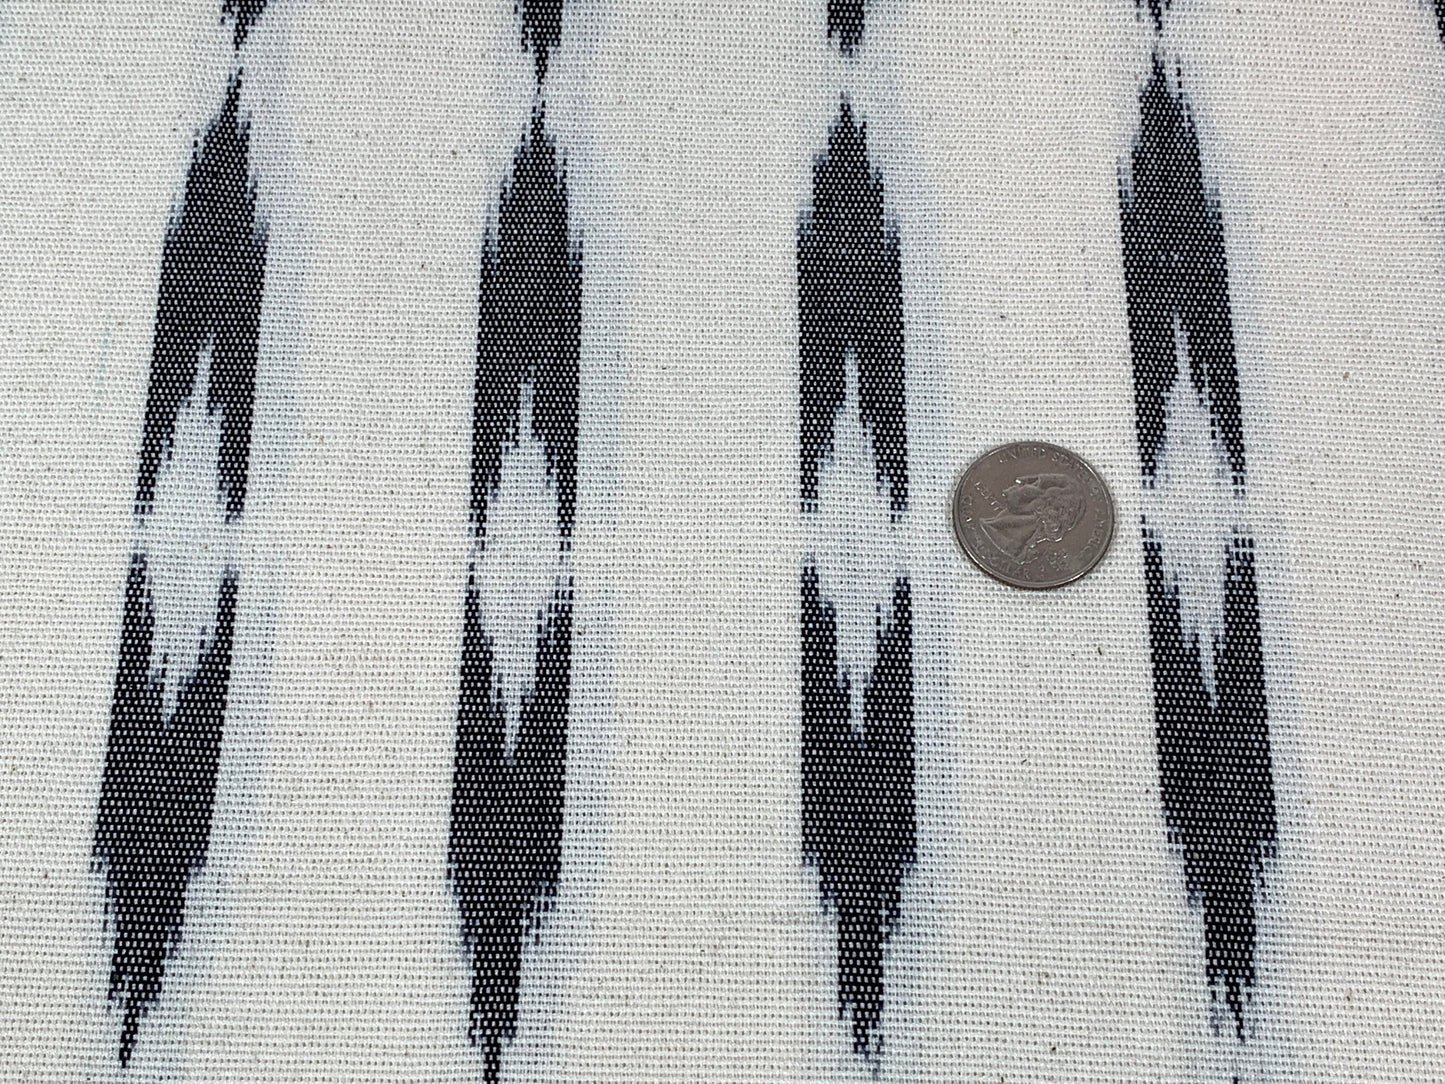 Guatemalan Handwoven Natural and Charcoal Gray Ikat Stripe